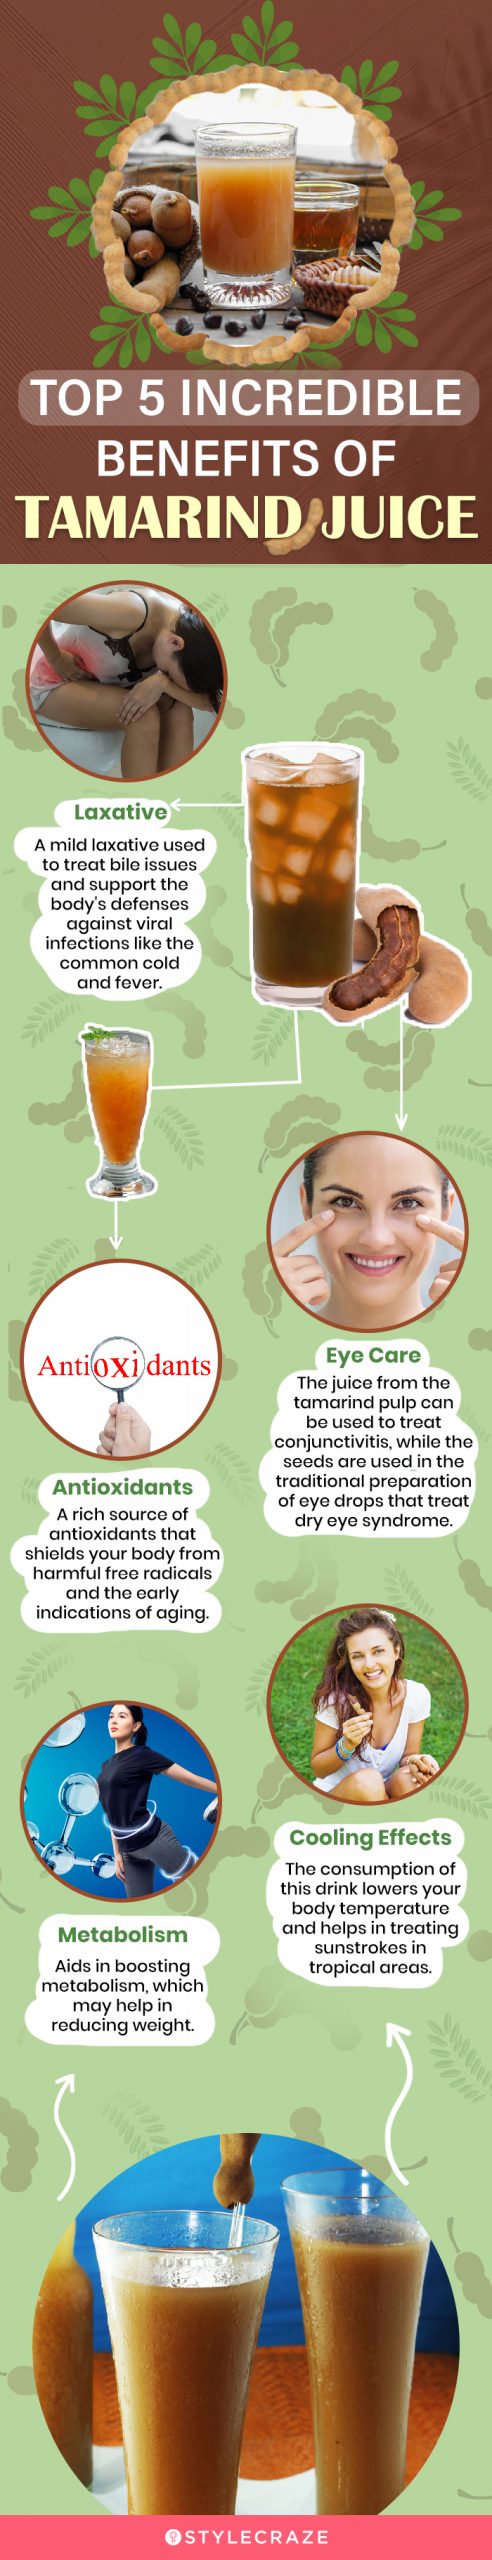 top 5 incredible benefits of tamarind juice [infographic]